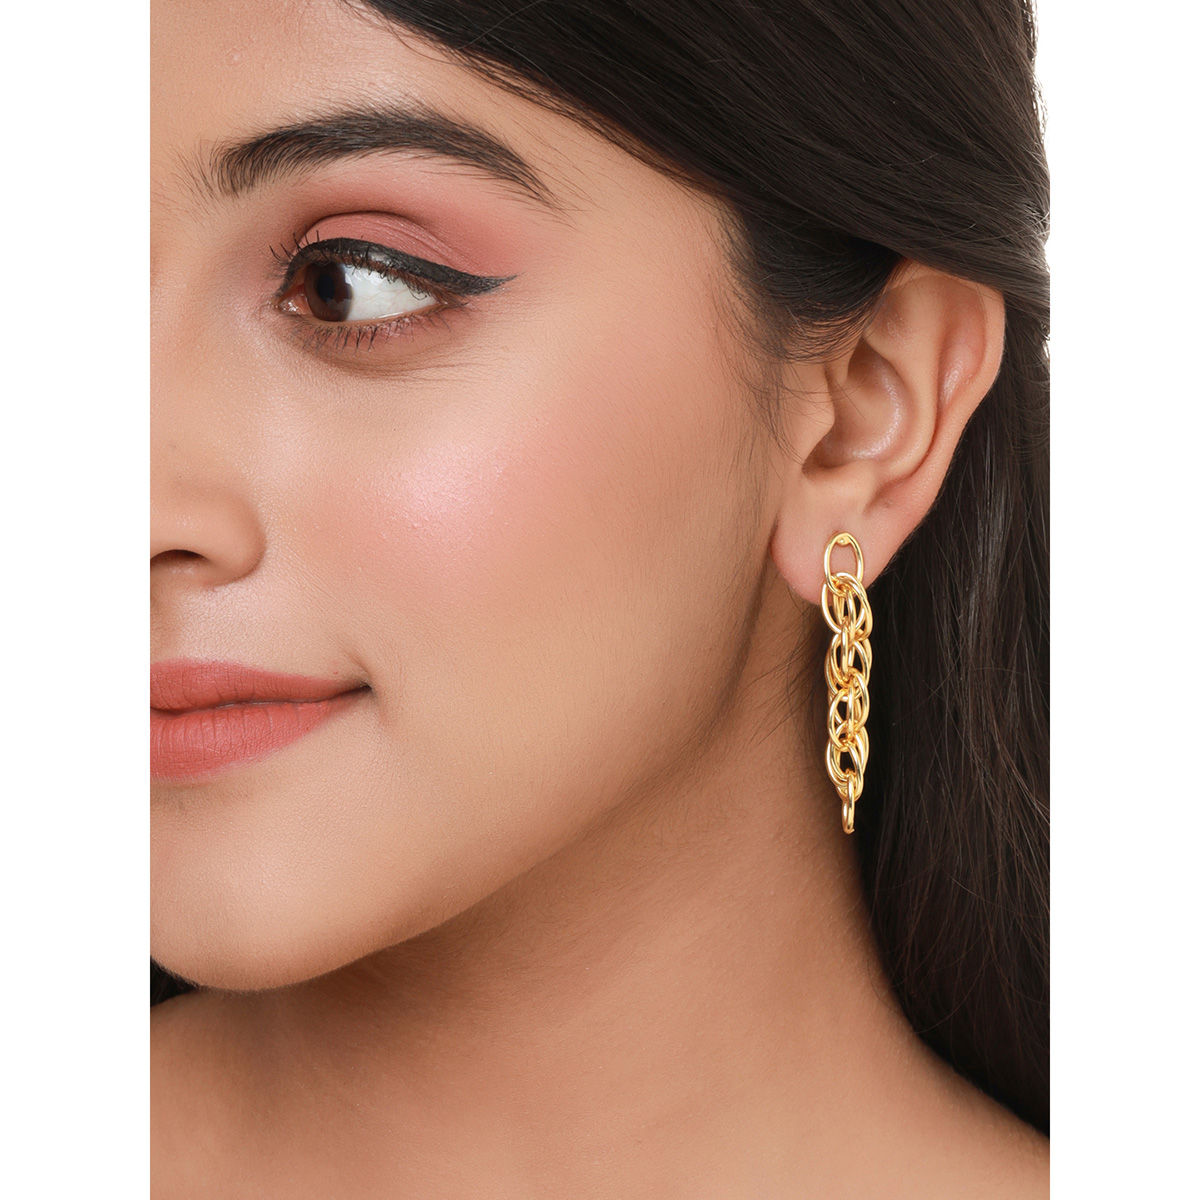 Golden Chandlier Hanging Earrings Gold Jhumka Earring